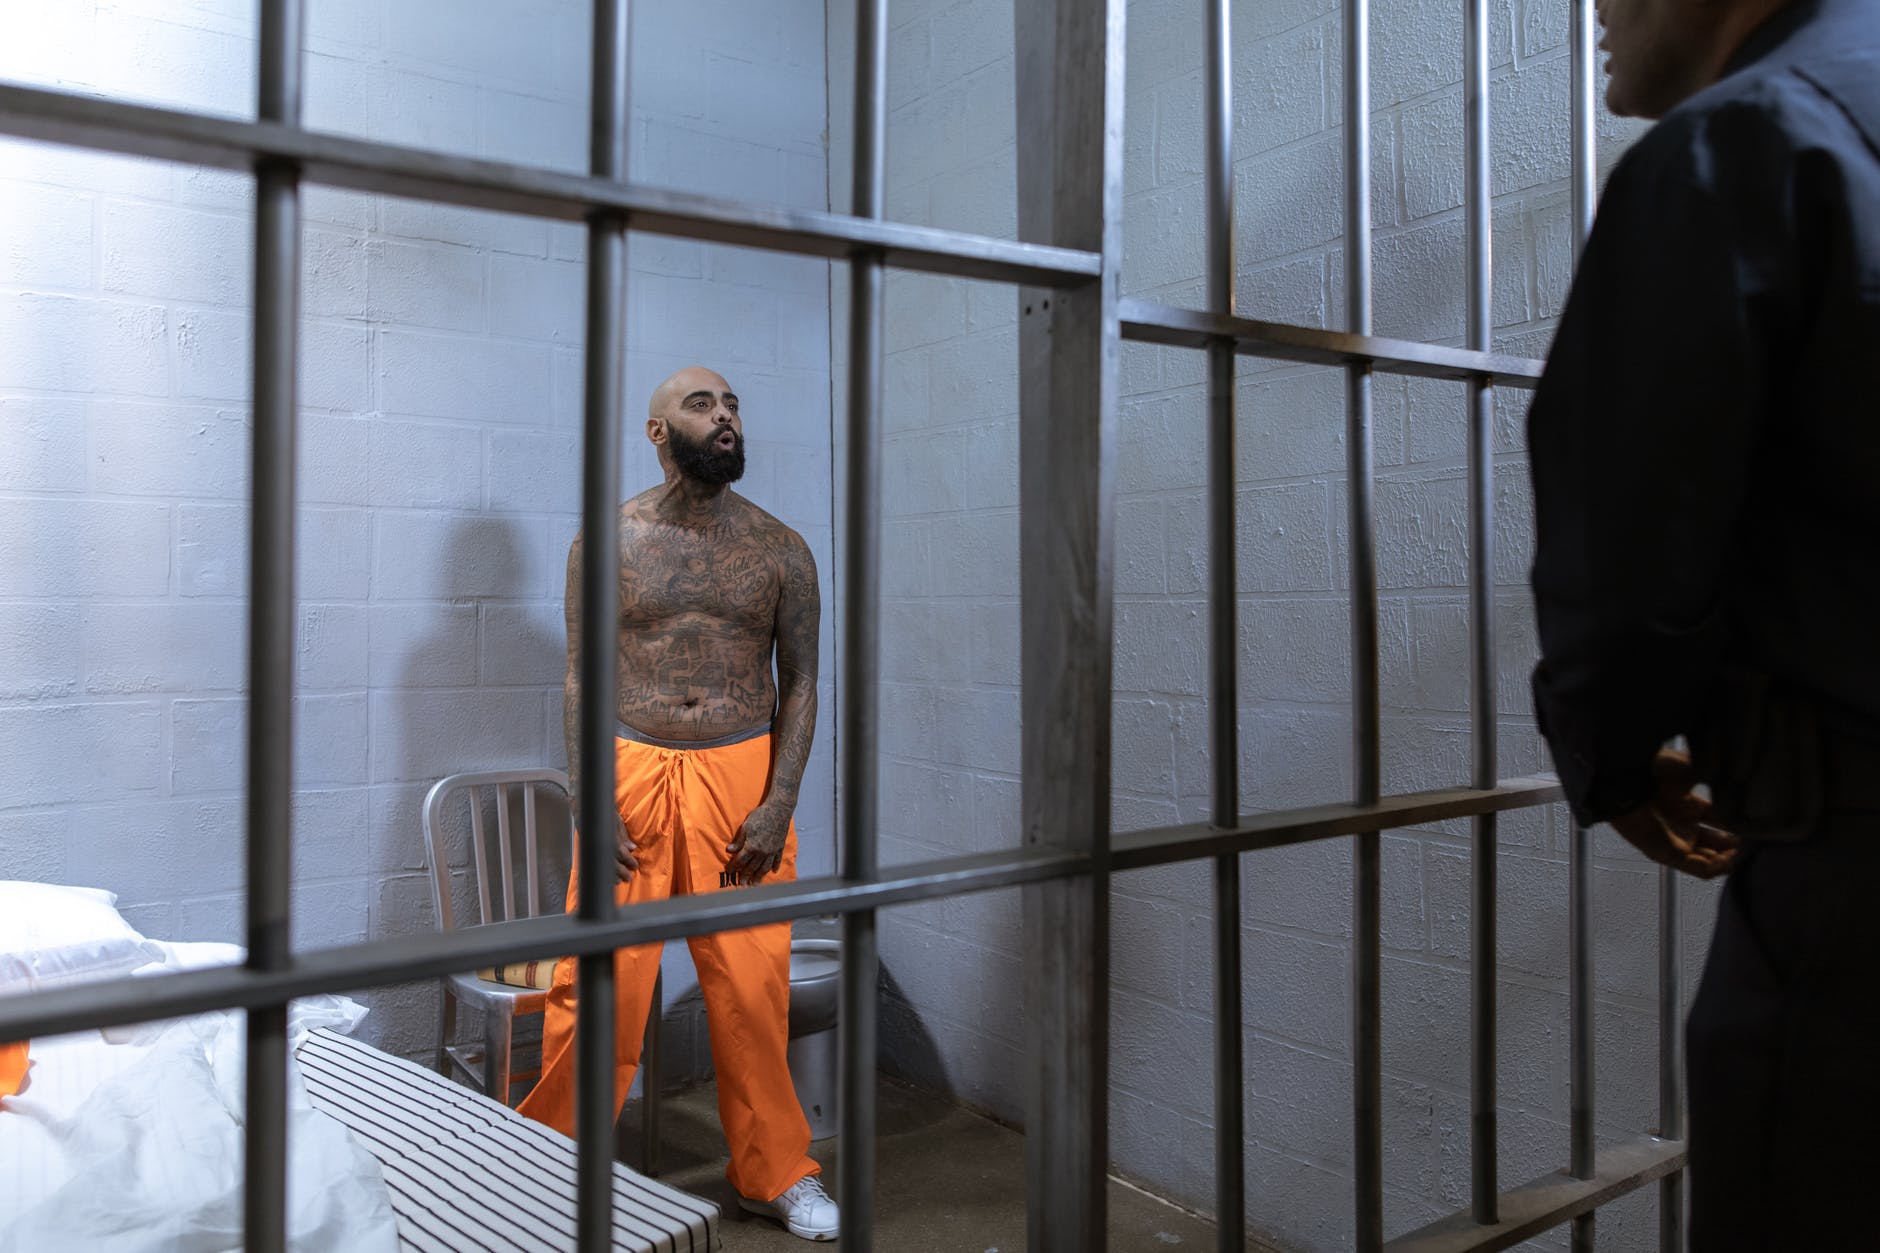 a shirtless prisoner full of body tattoos